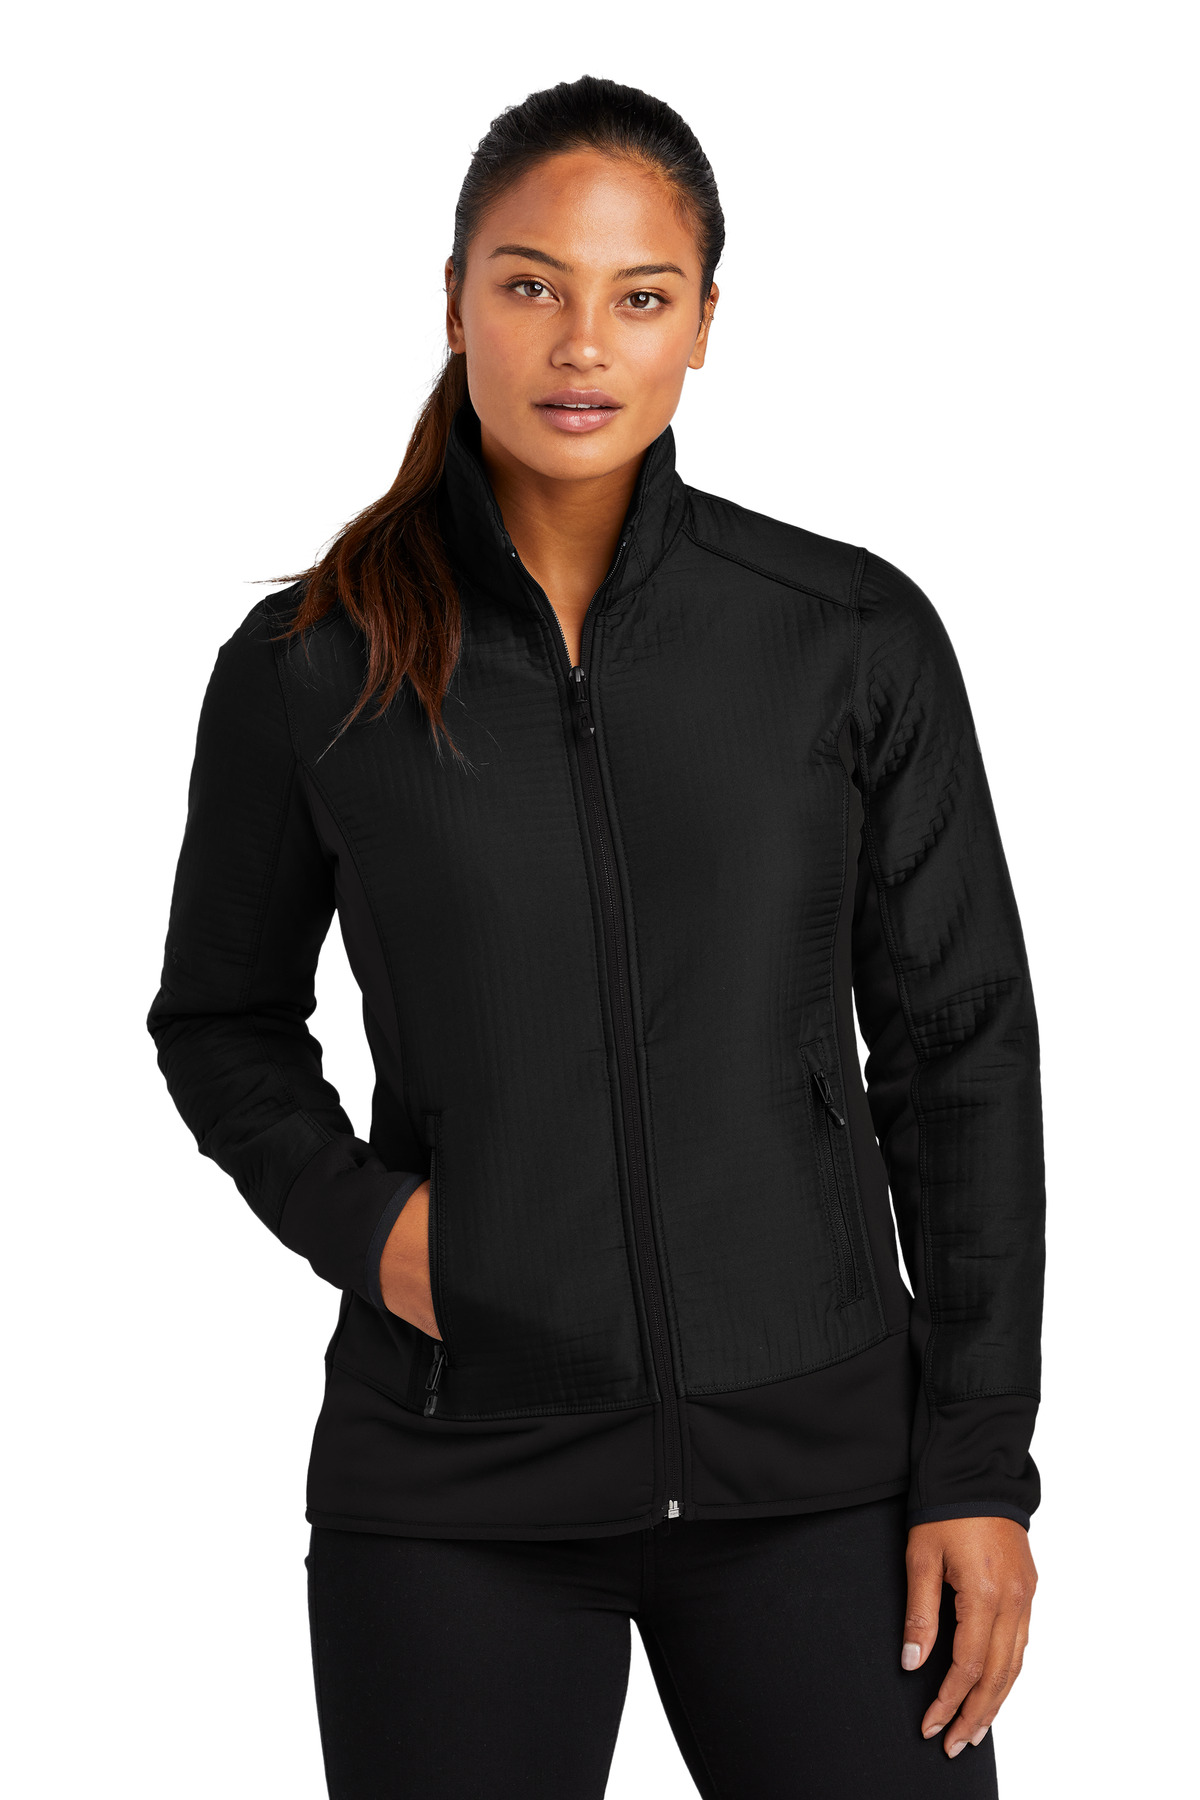 OGIO Ladies Outerwear,Sweatshirts&Fleece for Corporate Hospitality ® Ladies Trax Jacket.-OGIO